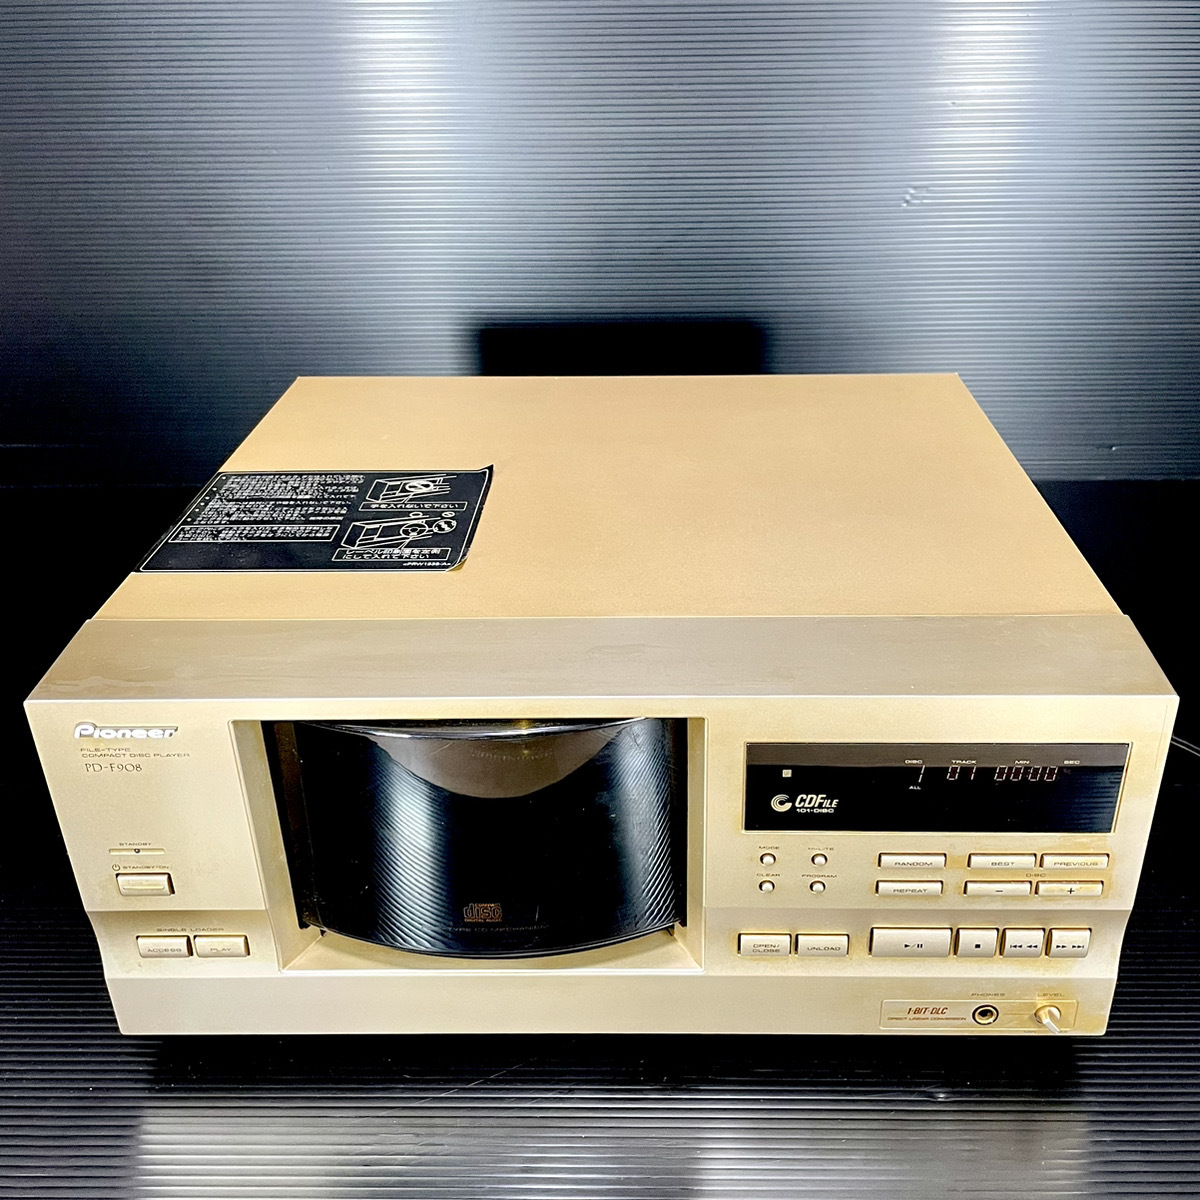 [Редкий обеспечение машины/красоты] Pioneer Pioneer PD-F908 101 CD Changer CD Player High Sound PD-F1007 Brother Aircraft